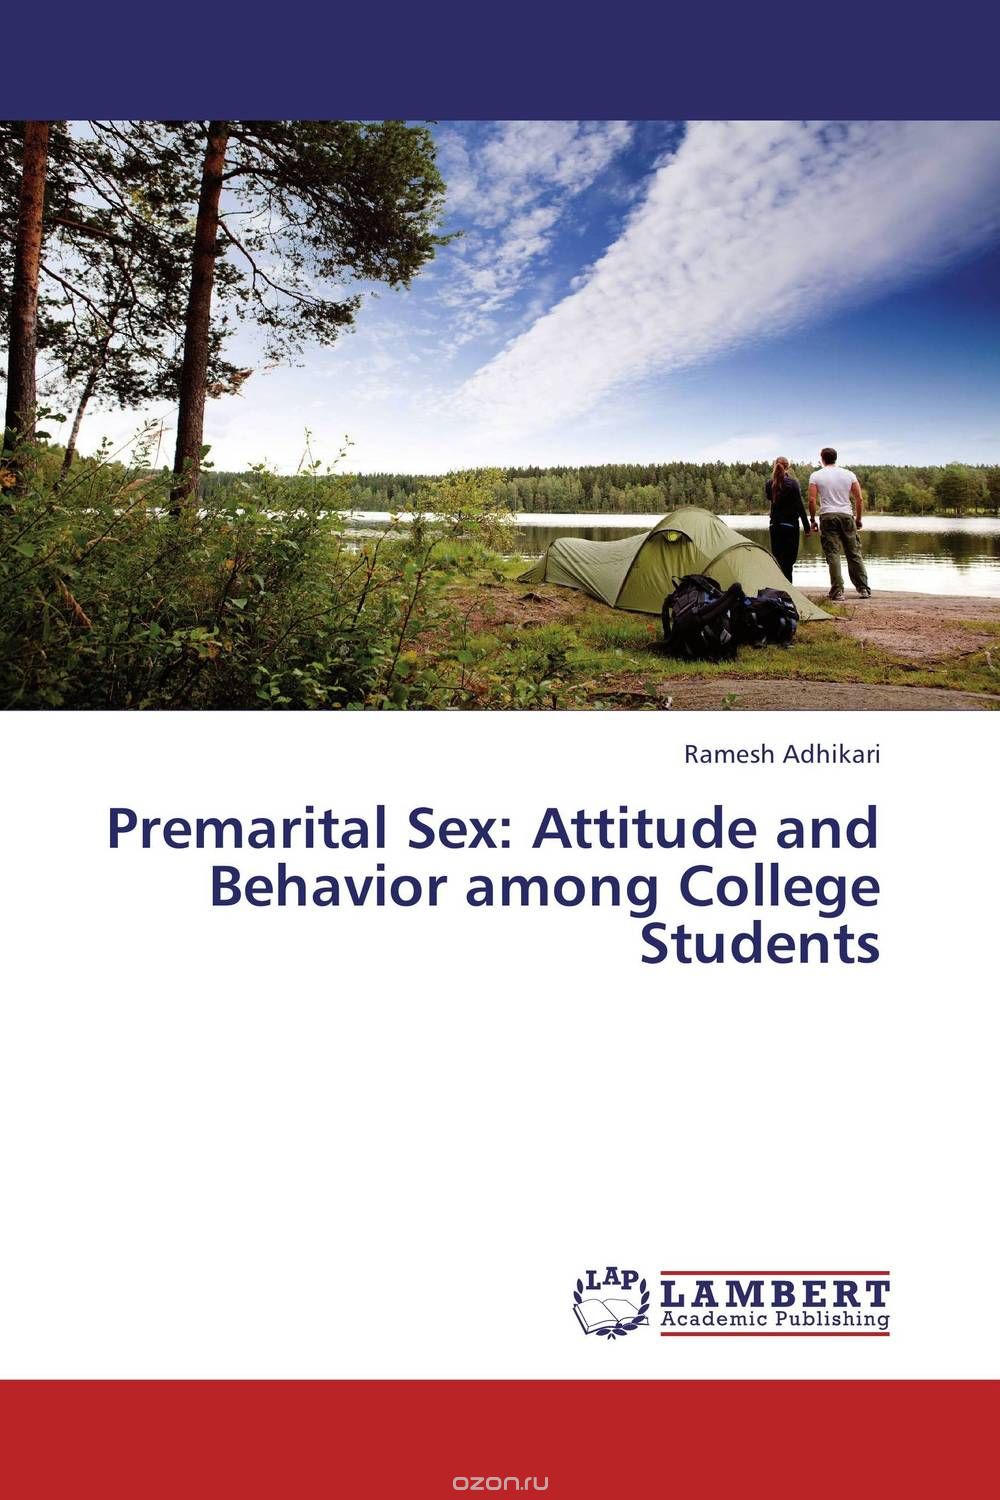 Скачать книгу "Premarital Sex: Attitude and Behavior among College Students"